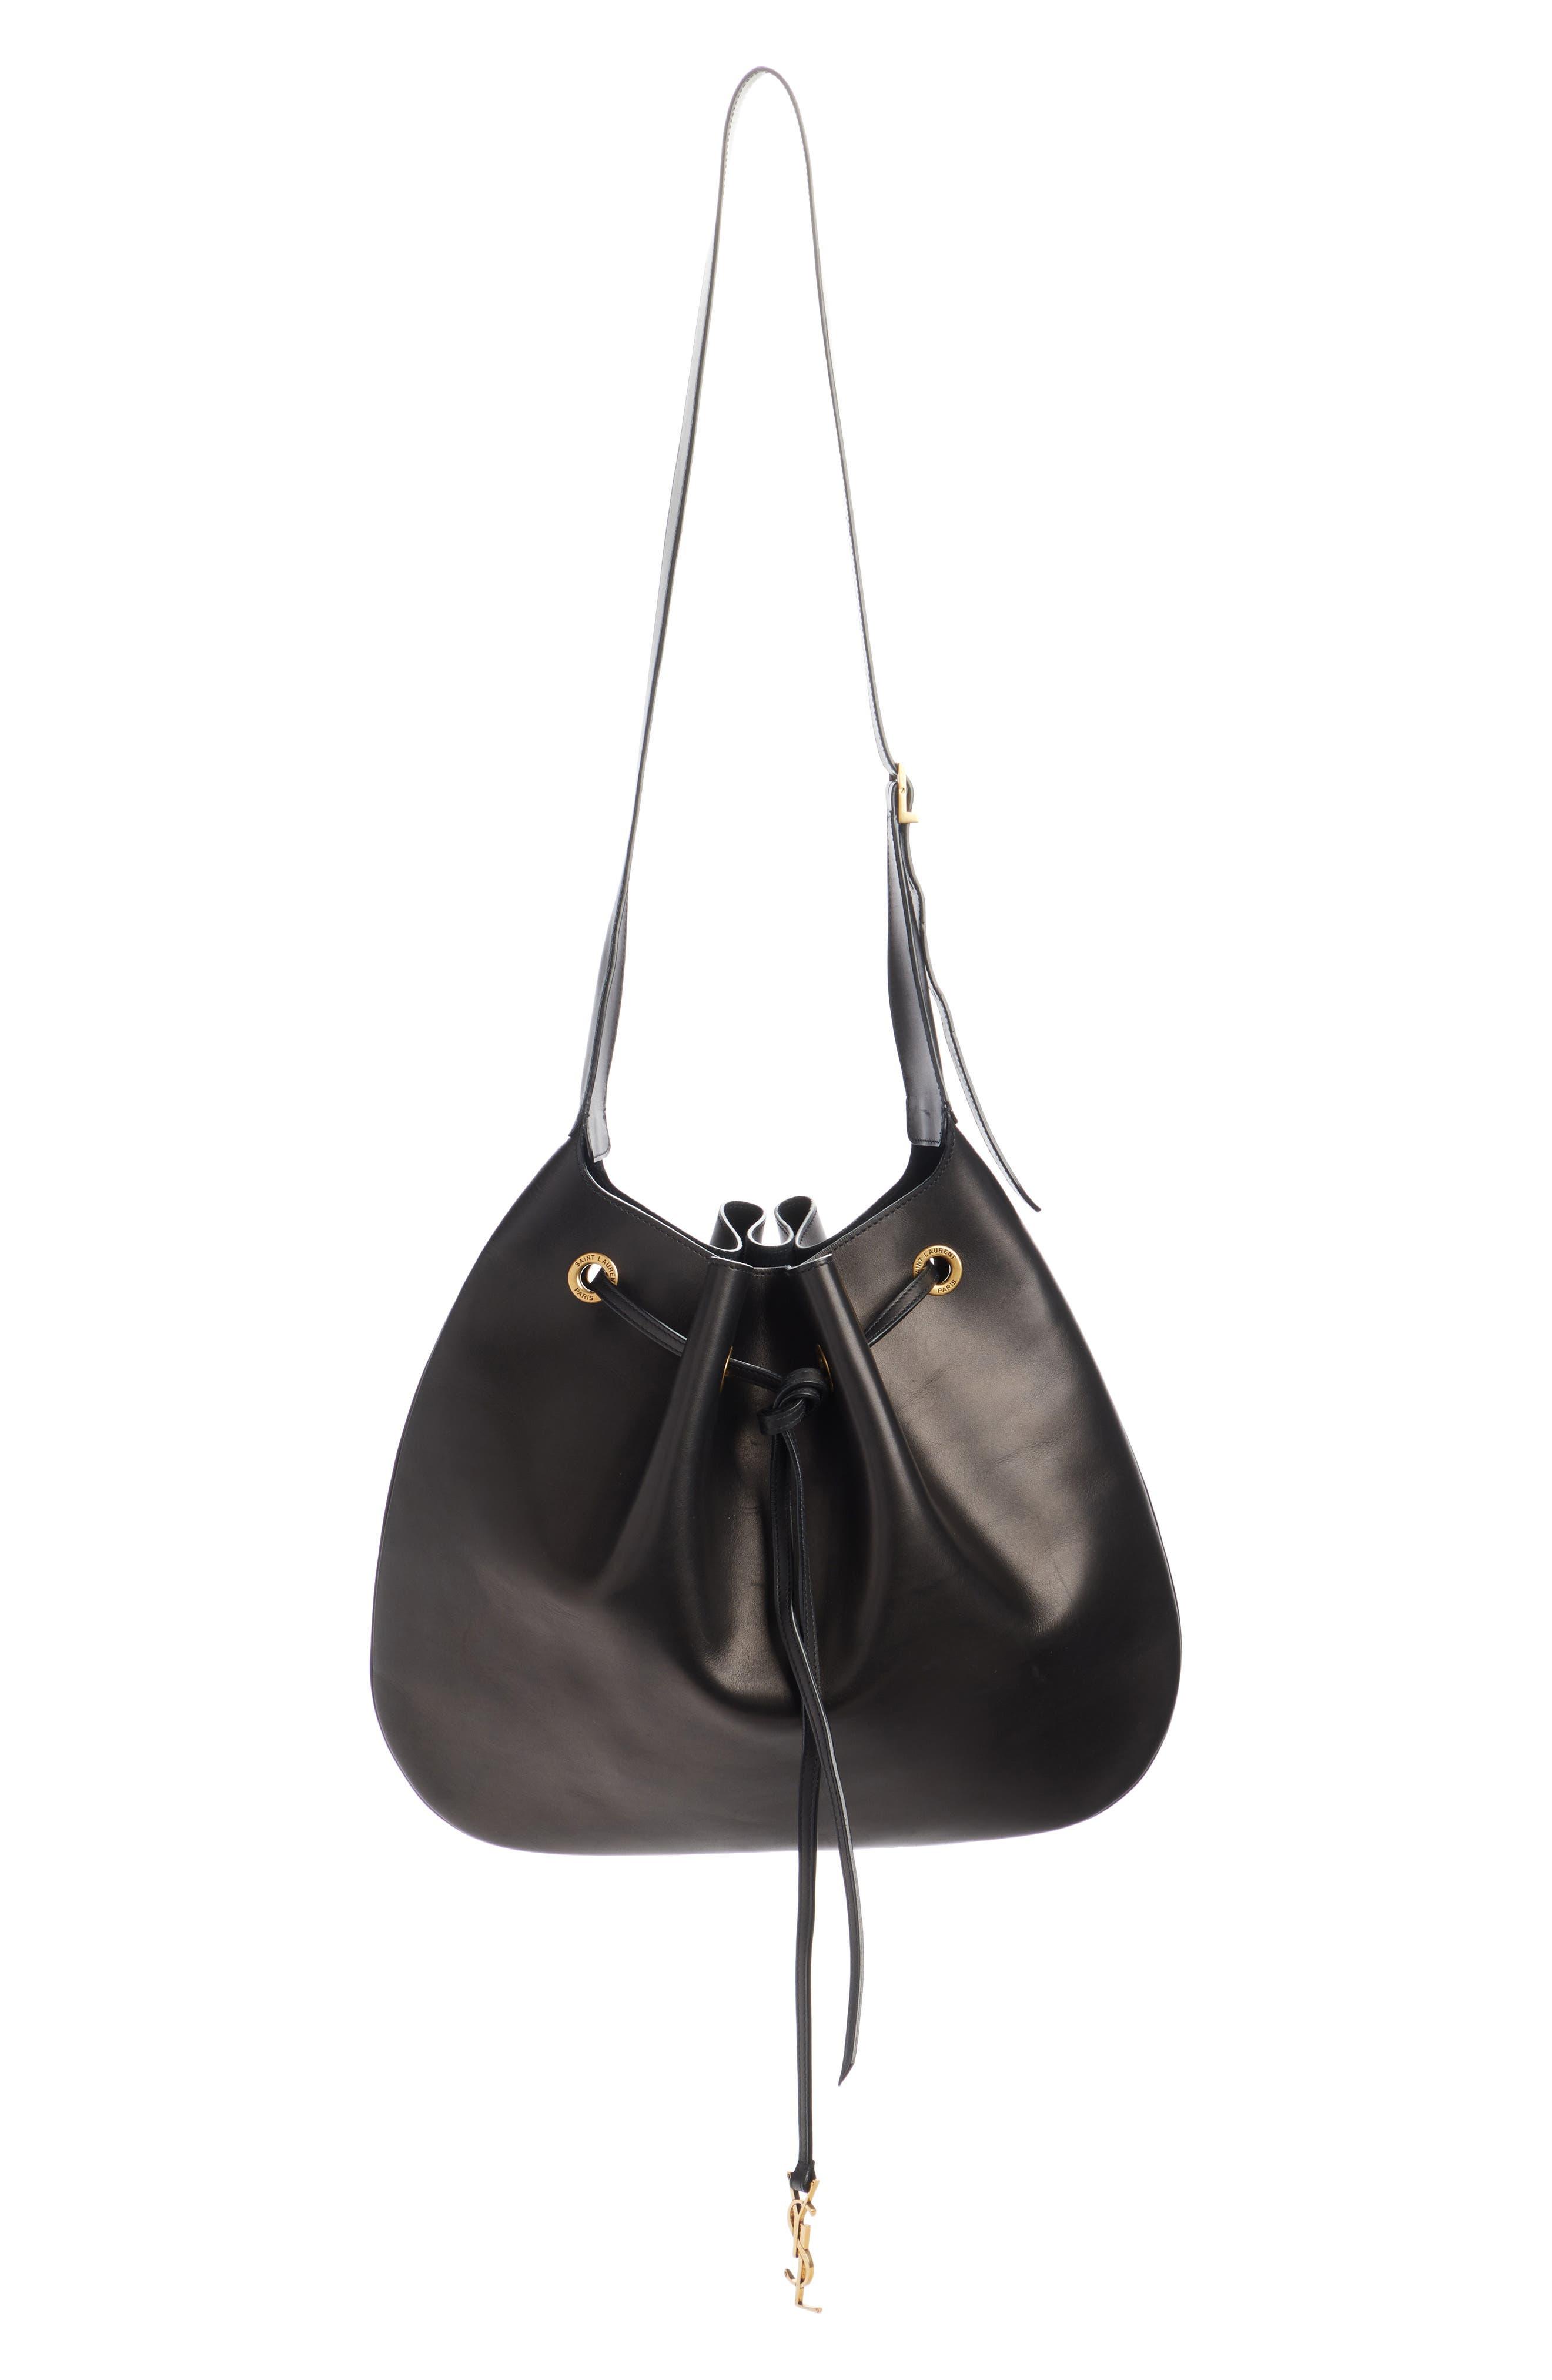 Saint Laurent Paris Vii Flat Leather Hobo Bag in Black | Lyst